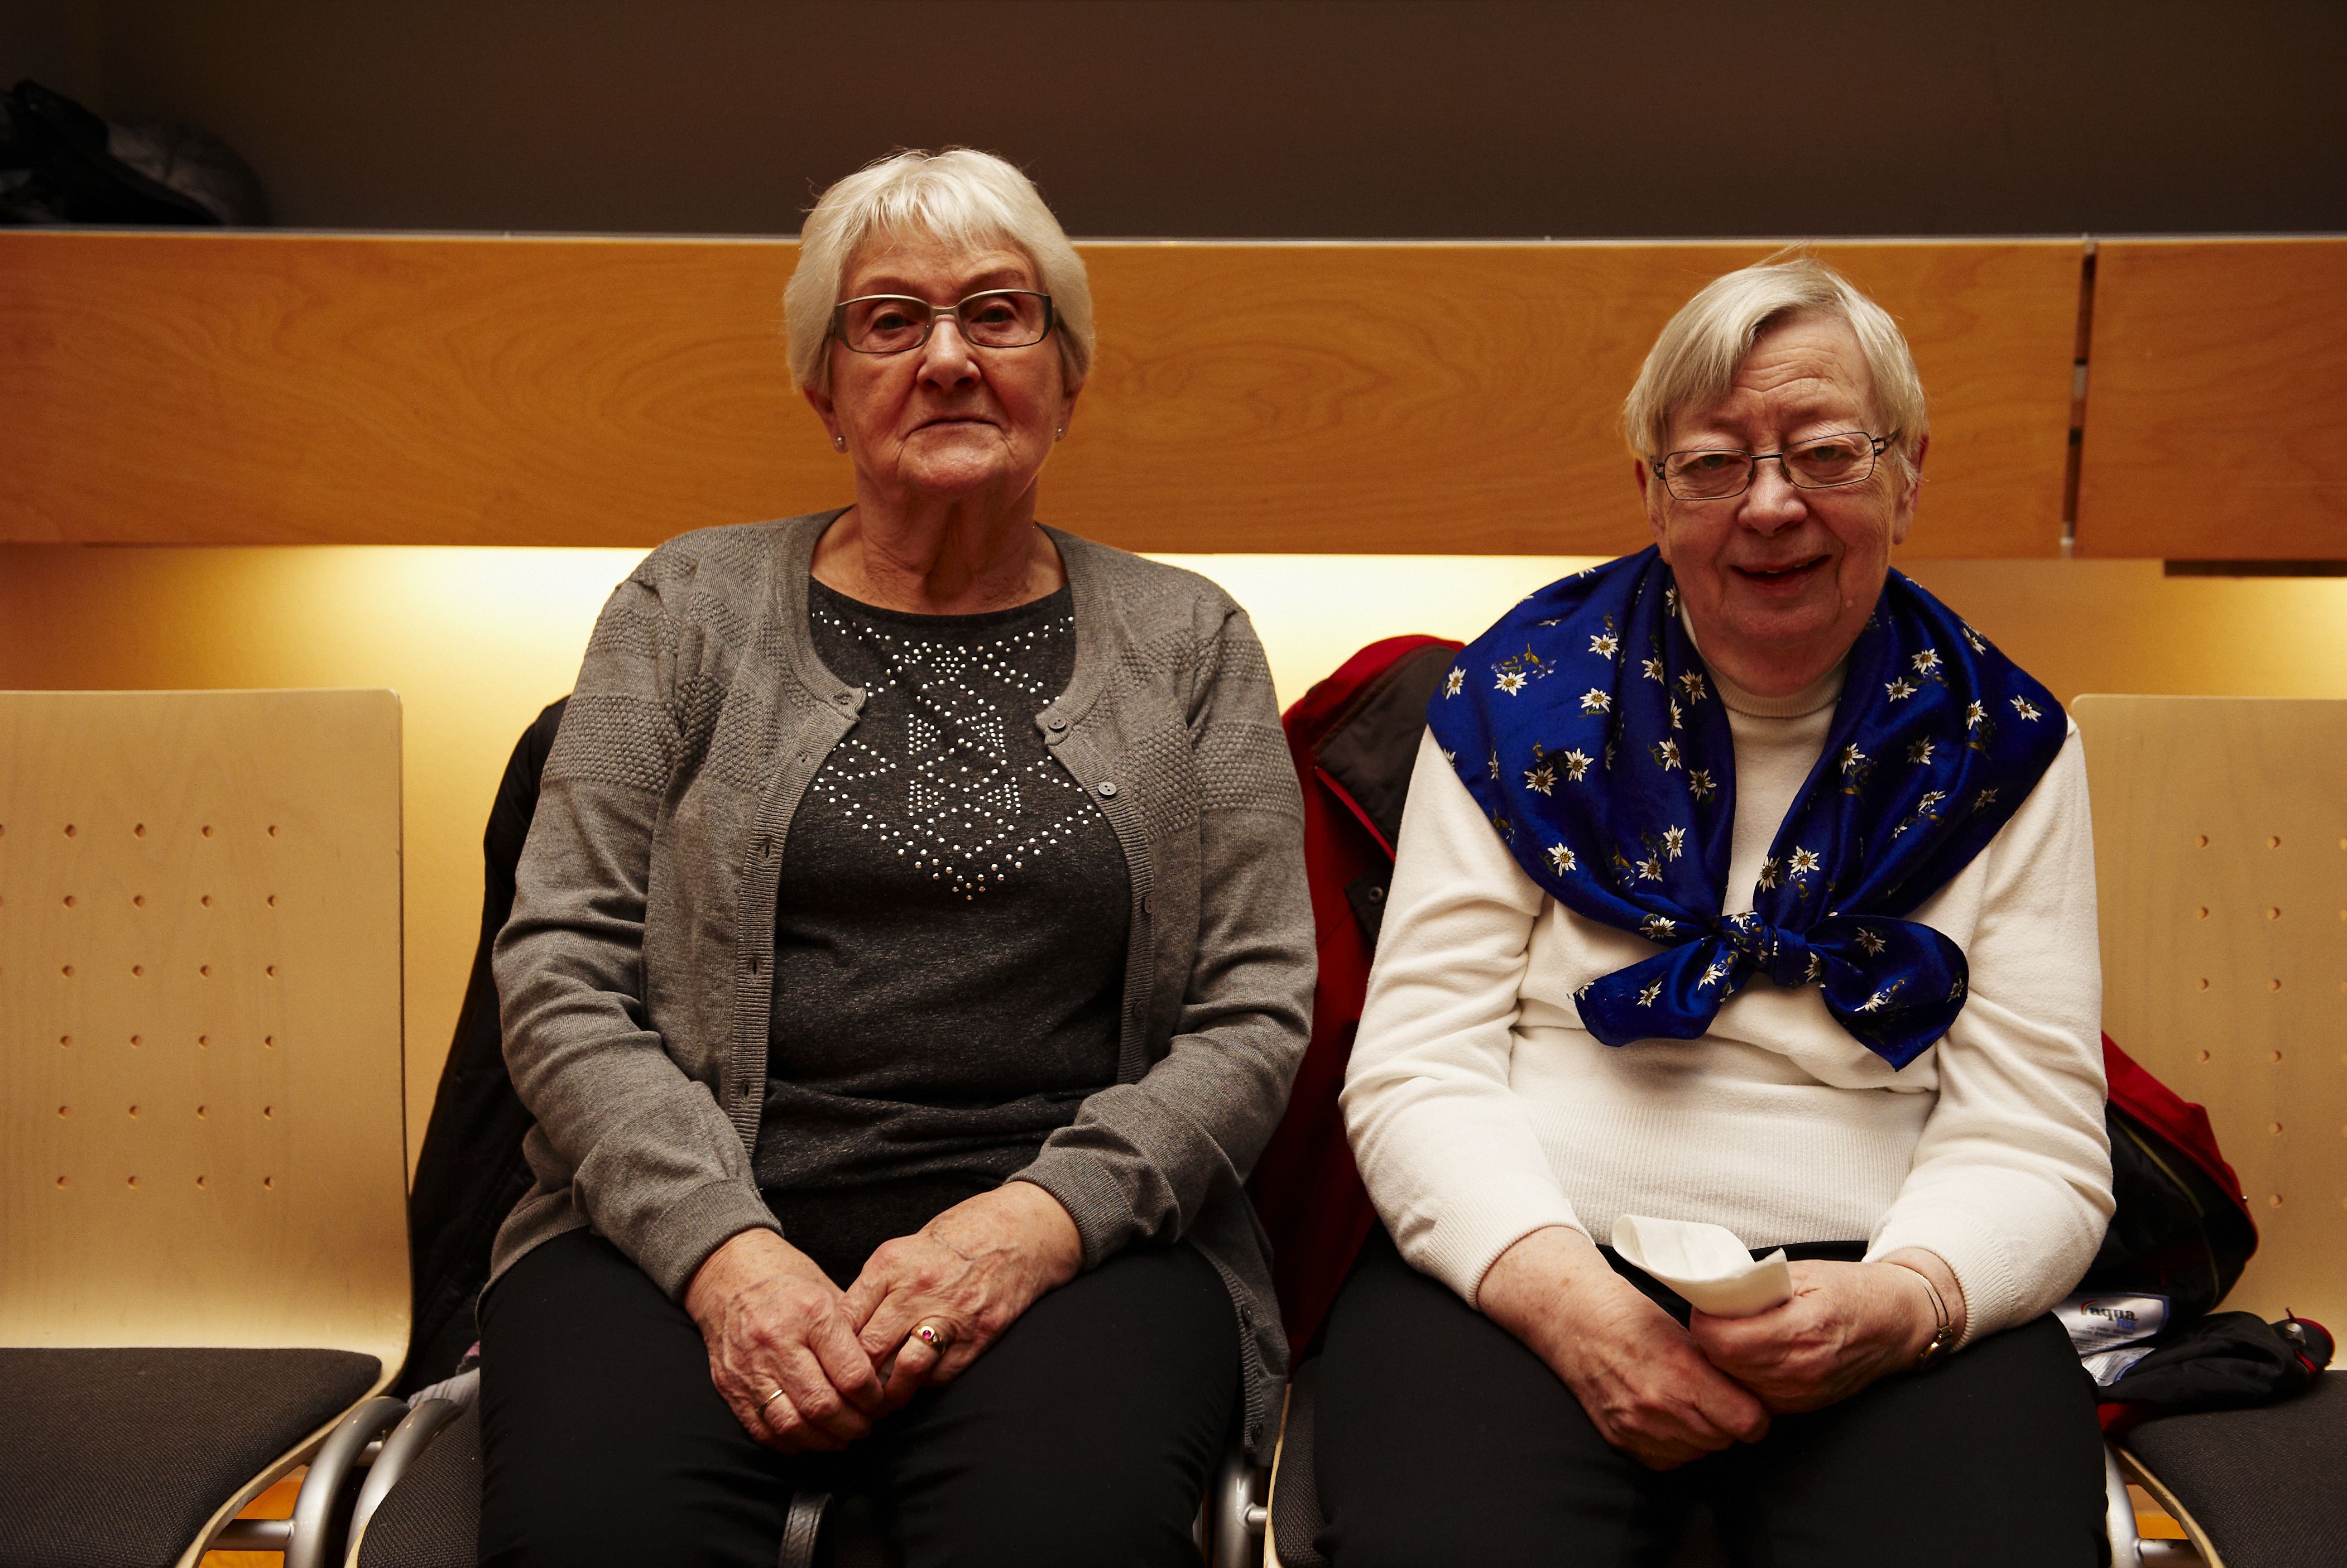 Jytte Holm og Grethe Carlsen kender om nogen dagens fødselar. De har nemlig boet i Lyngby almennyttige Boligselskab i henholdsvis 50 og 58 år.